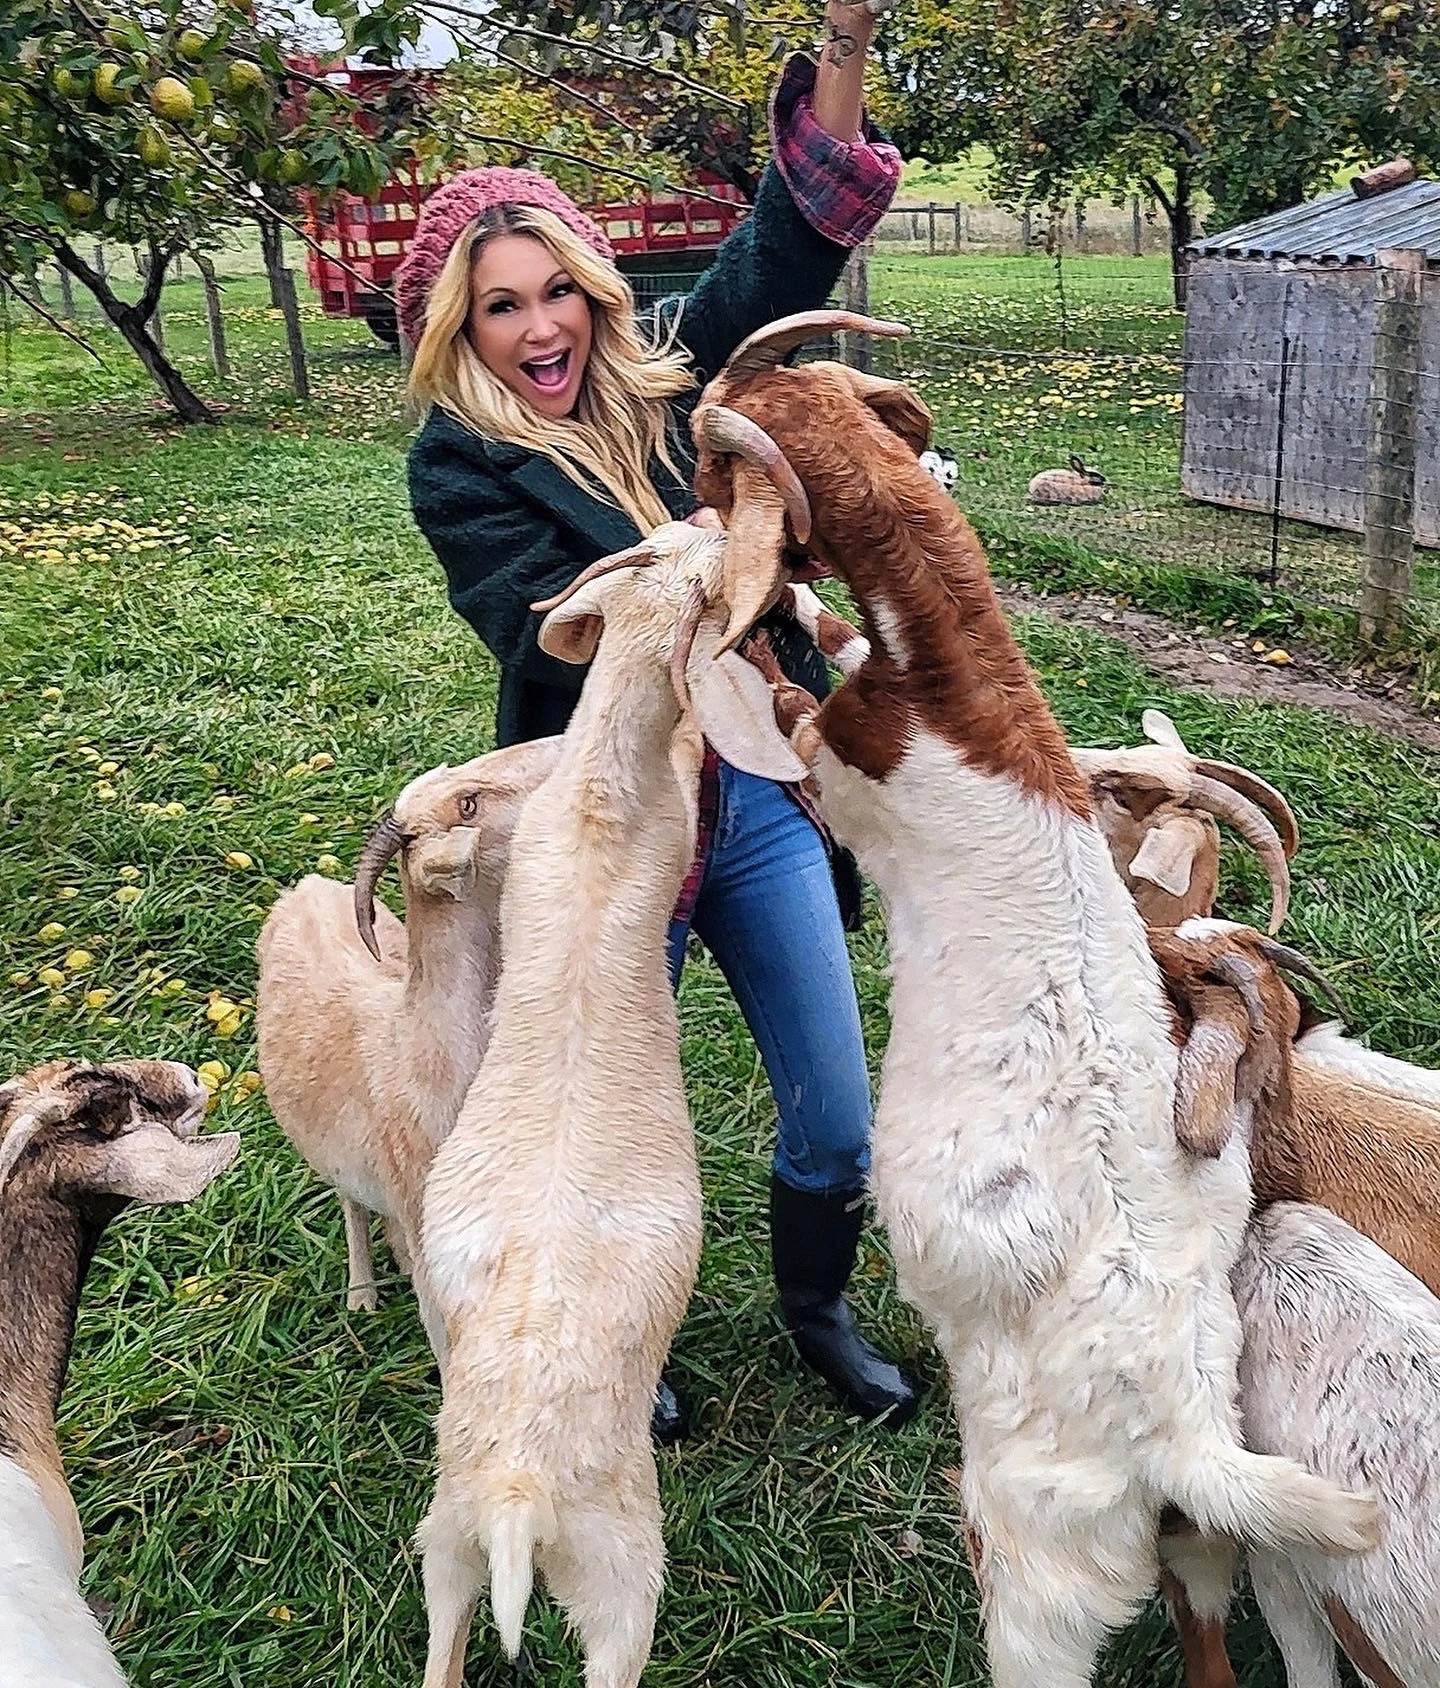 fun with cute goats